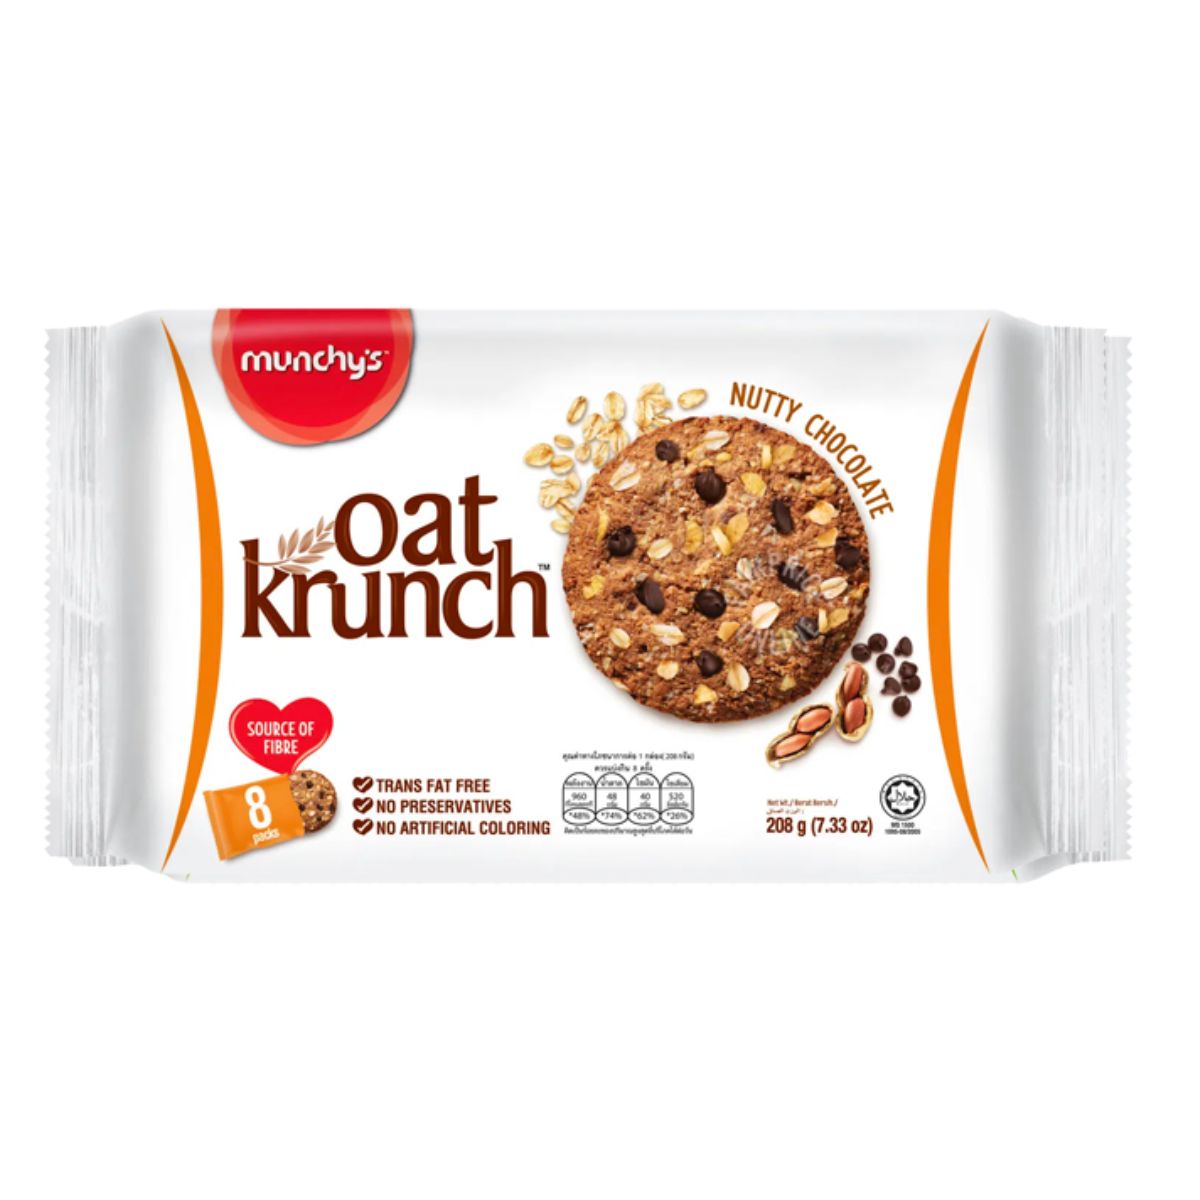 Munchy's Oat Krunch - Nutty Chocolate - 208g